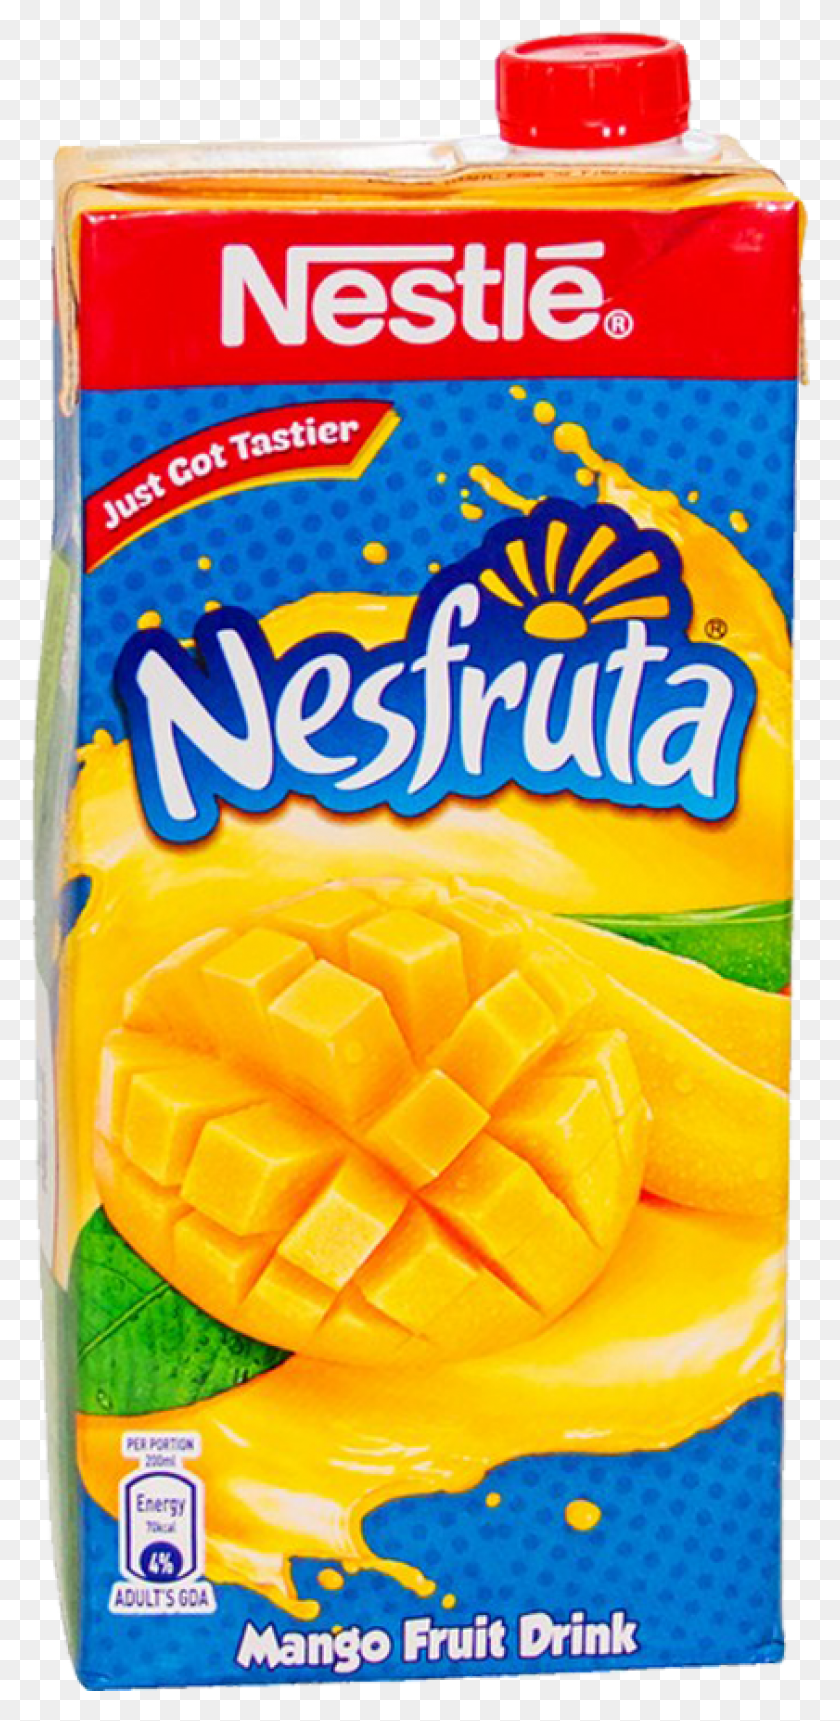 841x1791 Nestle Nesfruta Mango Fruta Bebida 1 Ltr Nestle Jugo De Mango, Planta, Alimentos Hd Png